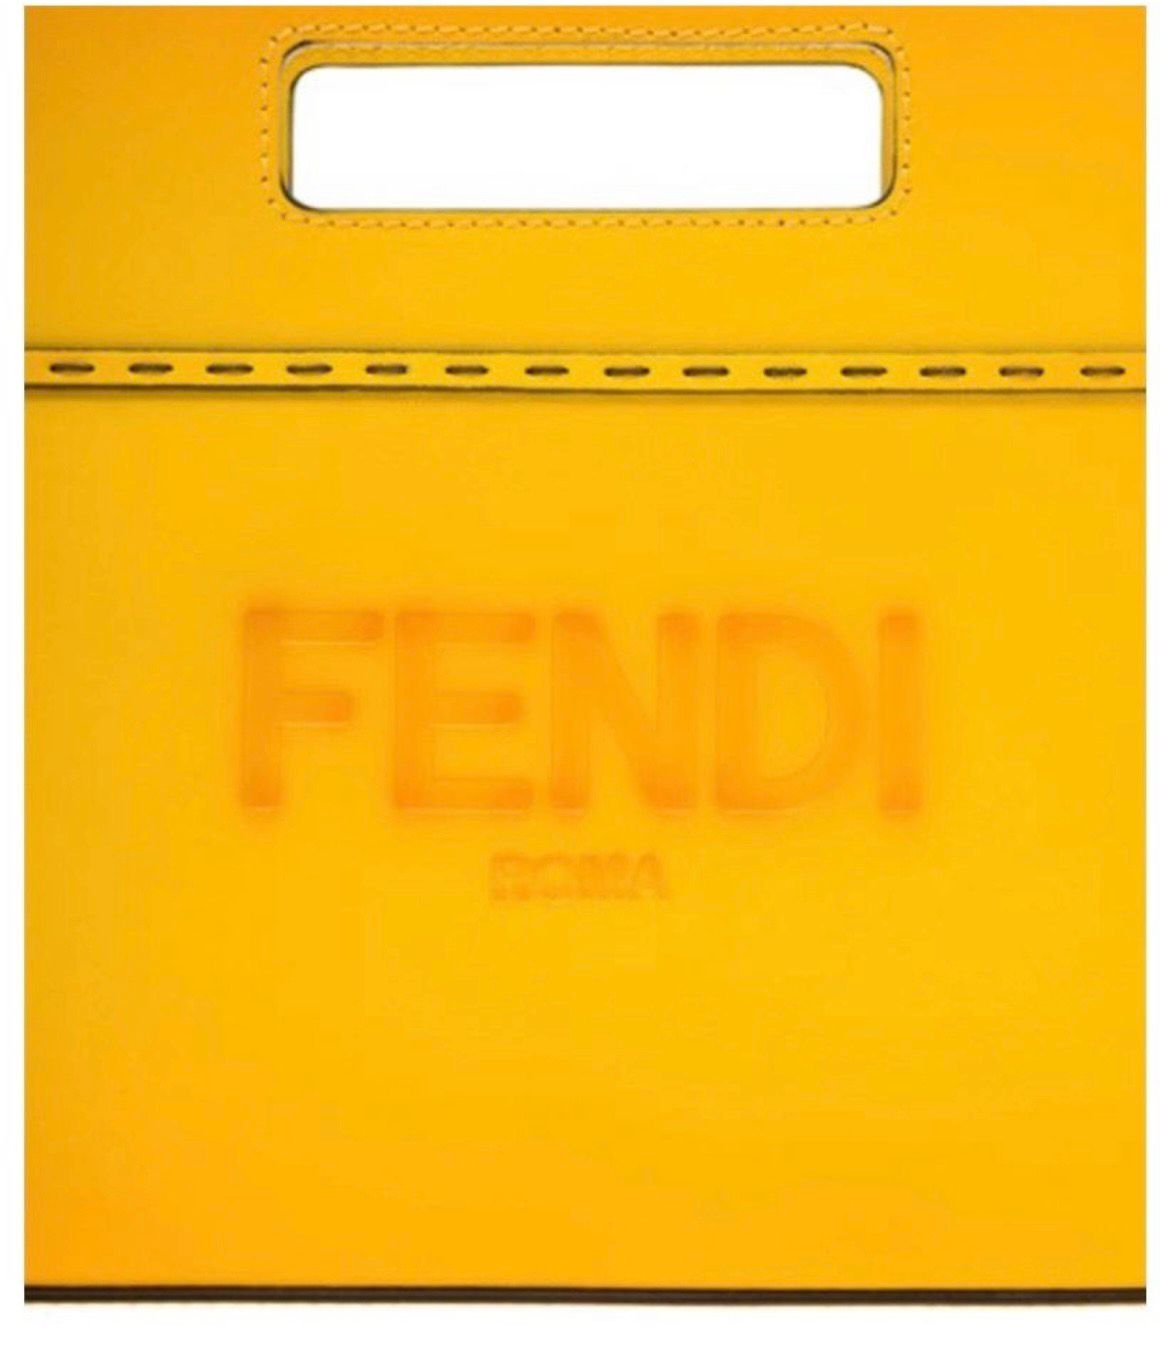 FENDI MAN'S YELLOW LEATHER MINI SHOPPER BAG WITH LOGO - 4